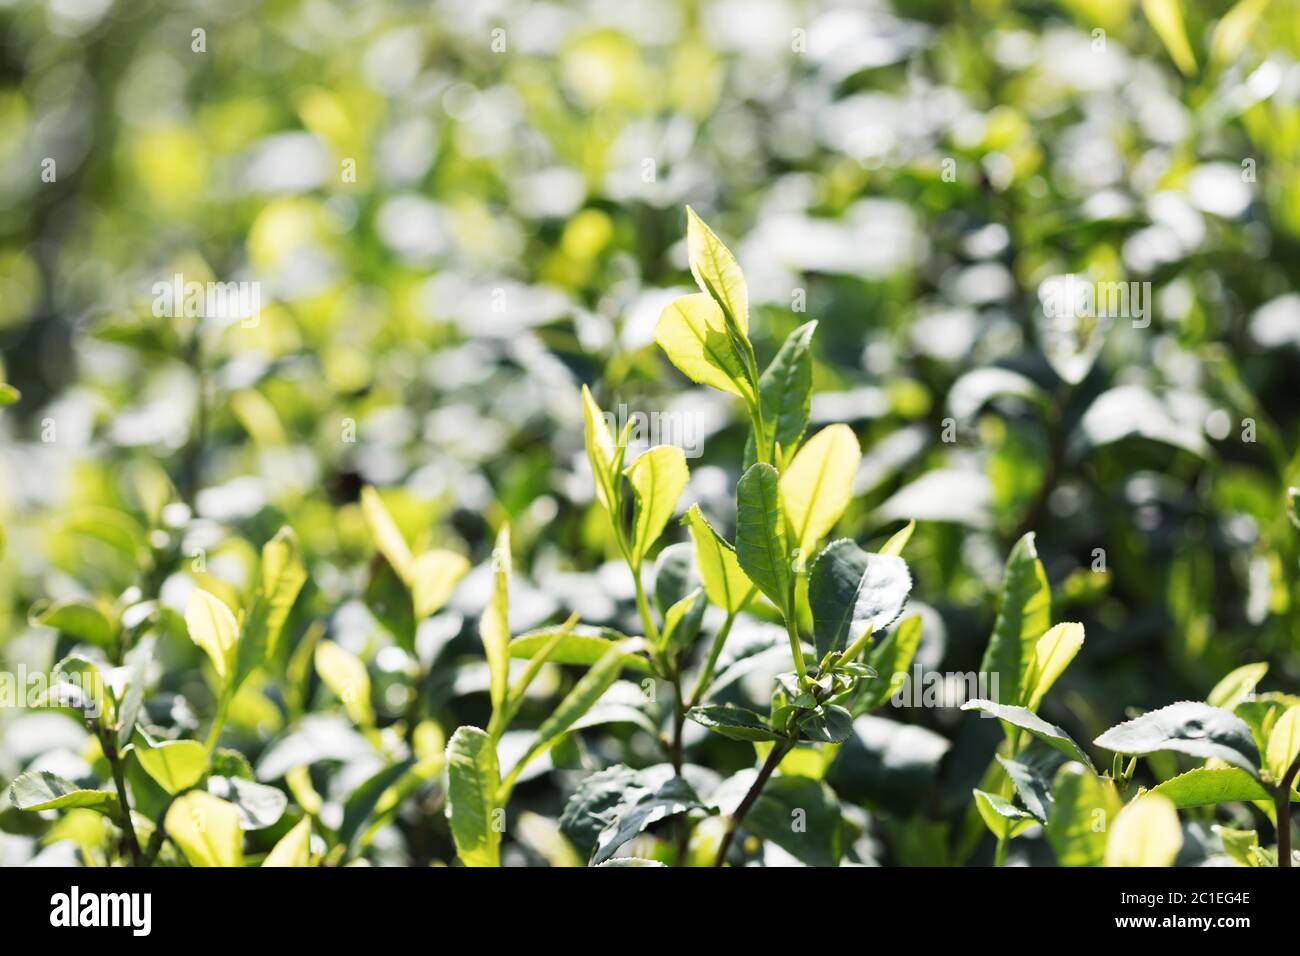 Beautiful landscape view of tea plantation Stock Photo